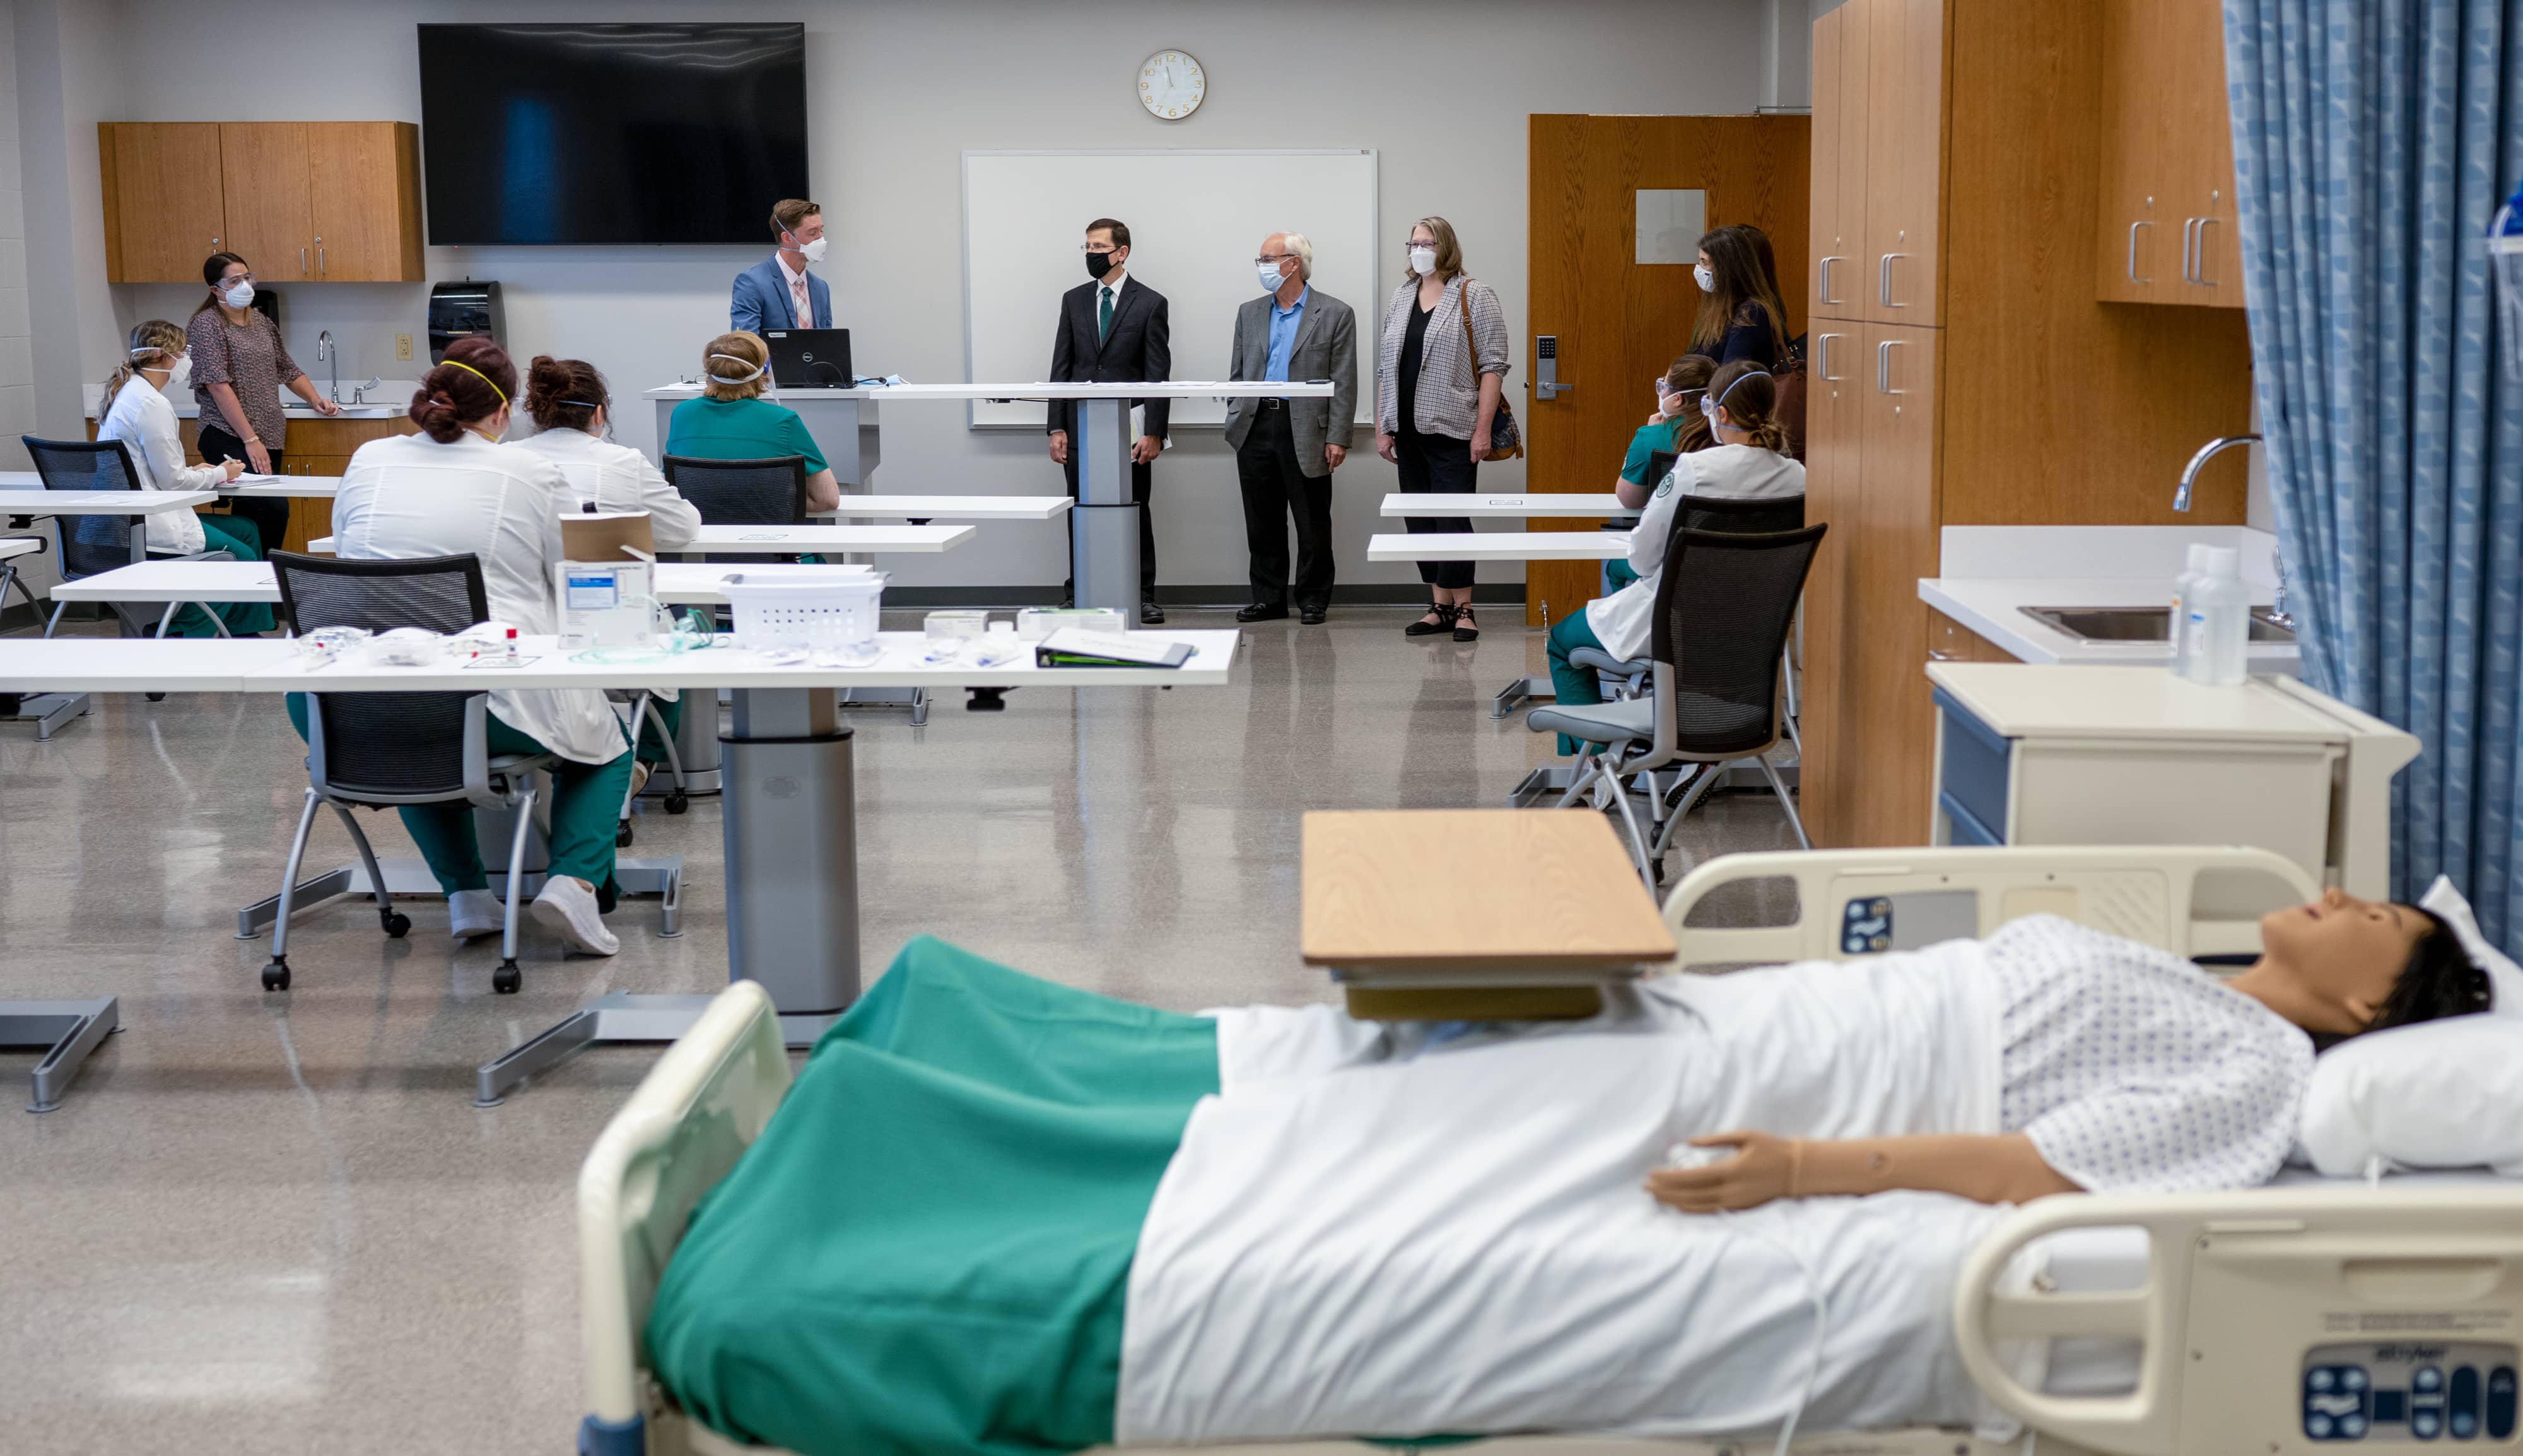 OHIO Eastern Associate Director of Nursing Matthew Fox led a tour of the new interactive nursing laboratory simulation.